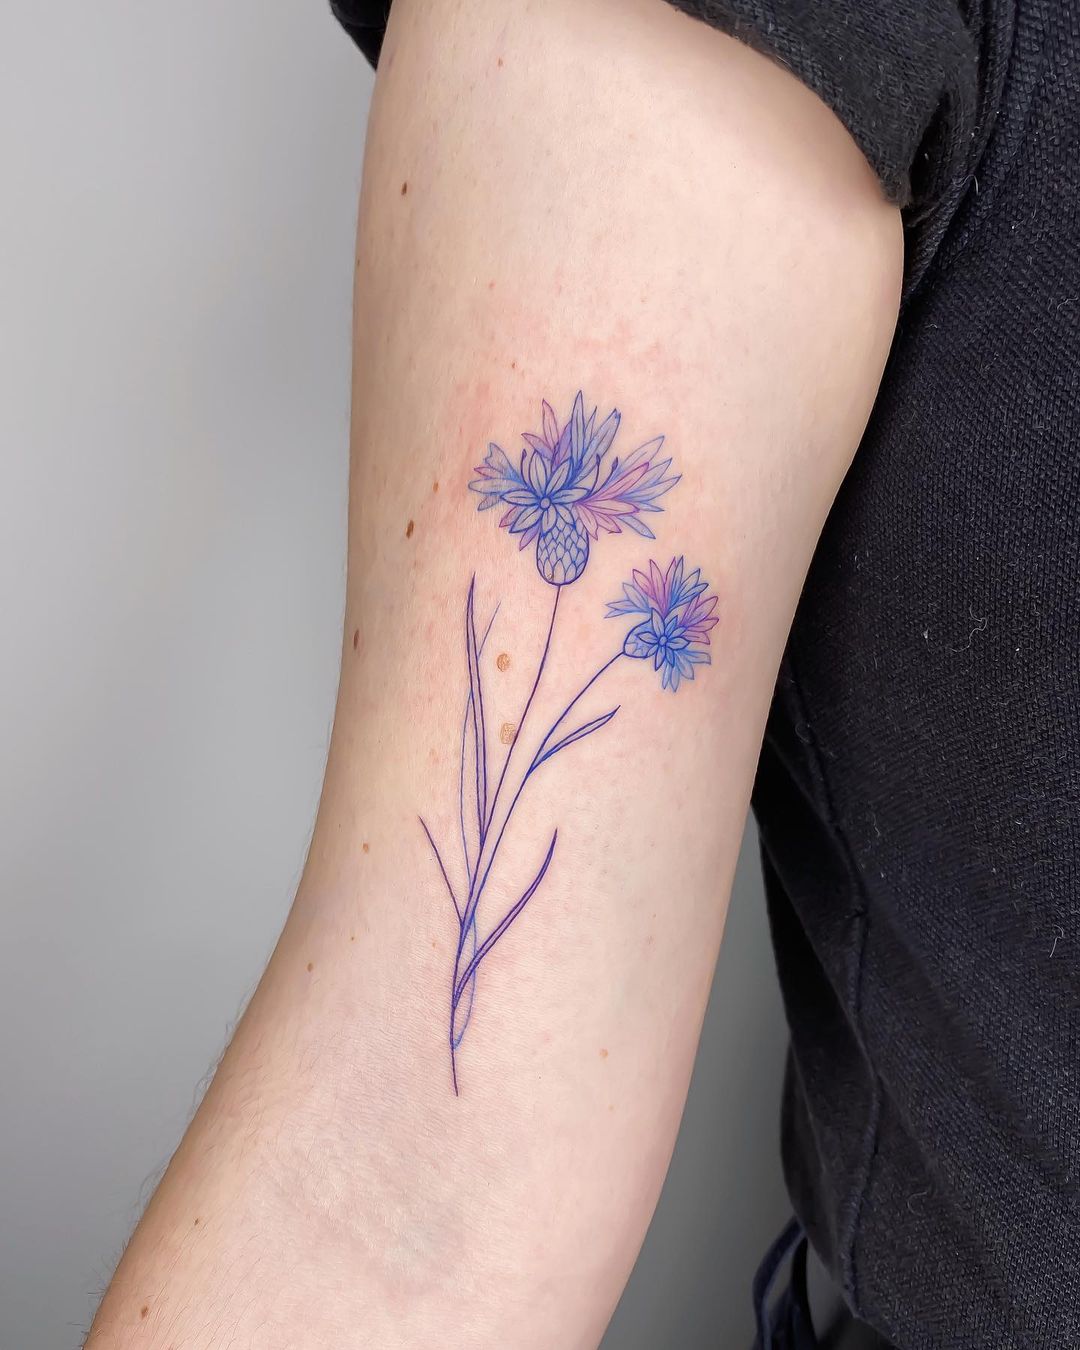 photo tattoo cornflower 03032019 112  idea for a tattoo with cornflower   tattoovaluenet  tattoovaluenet